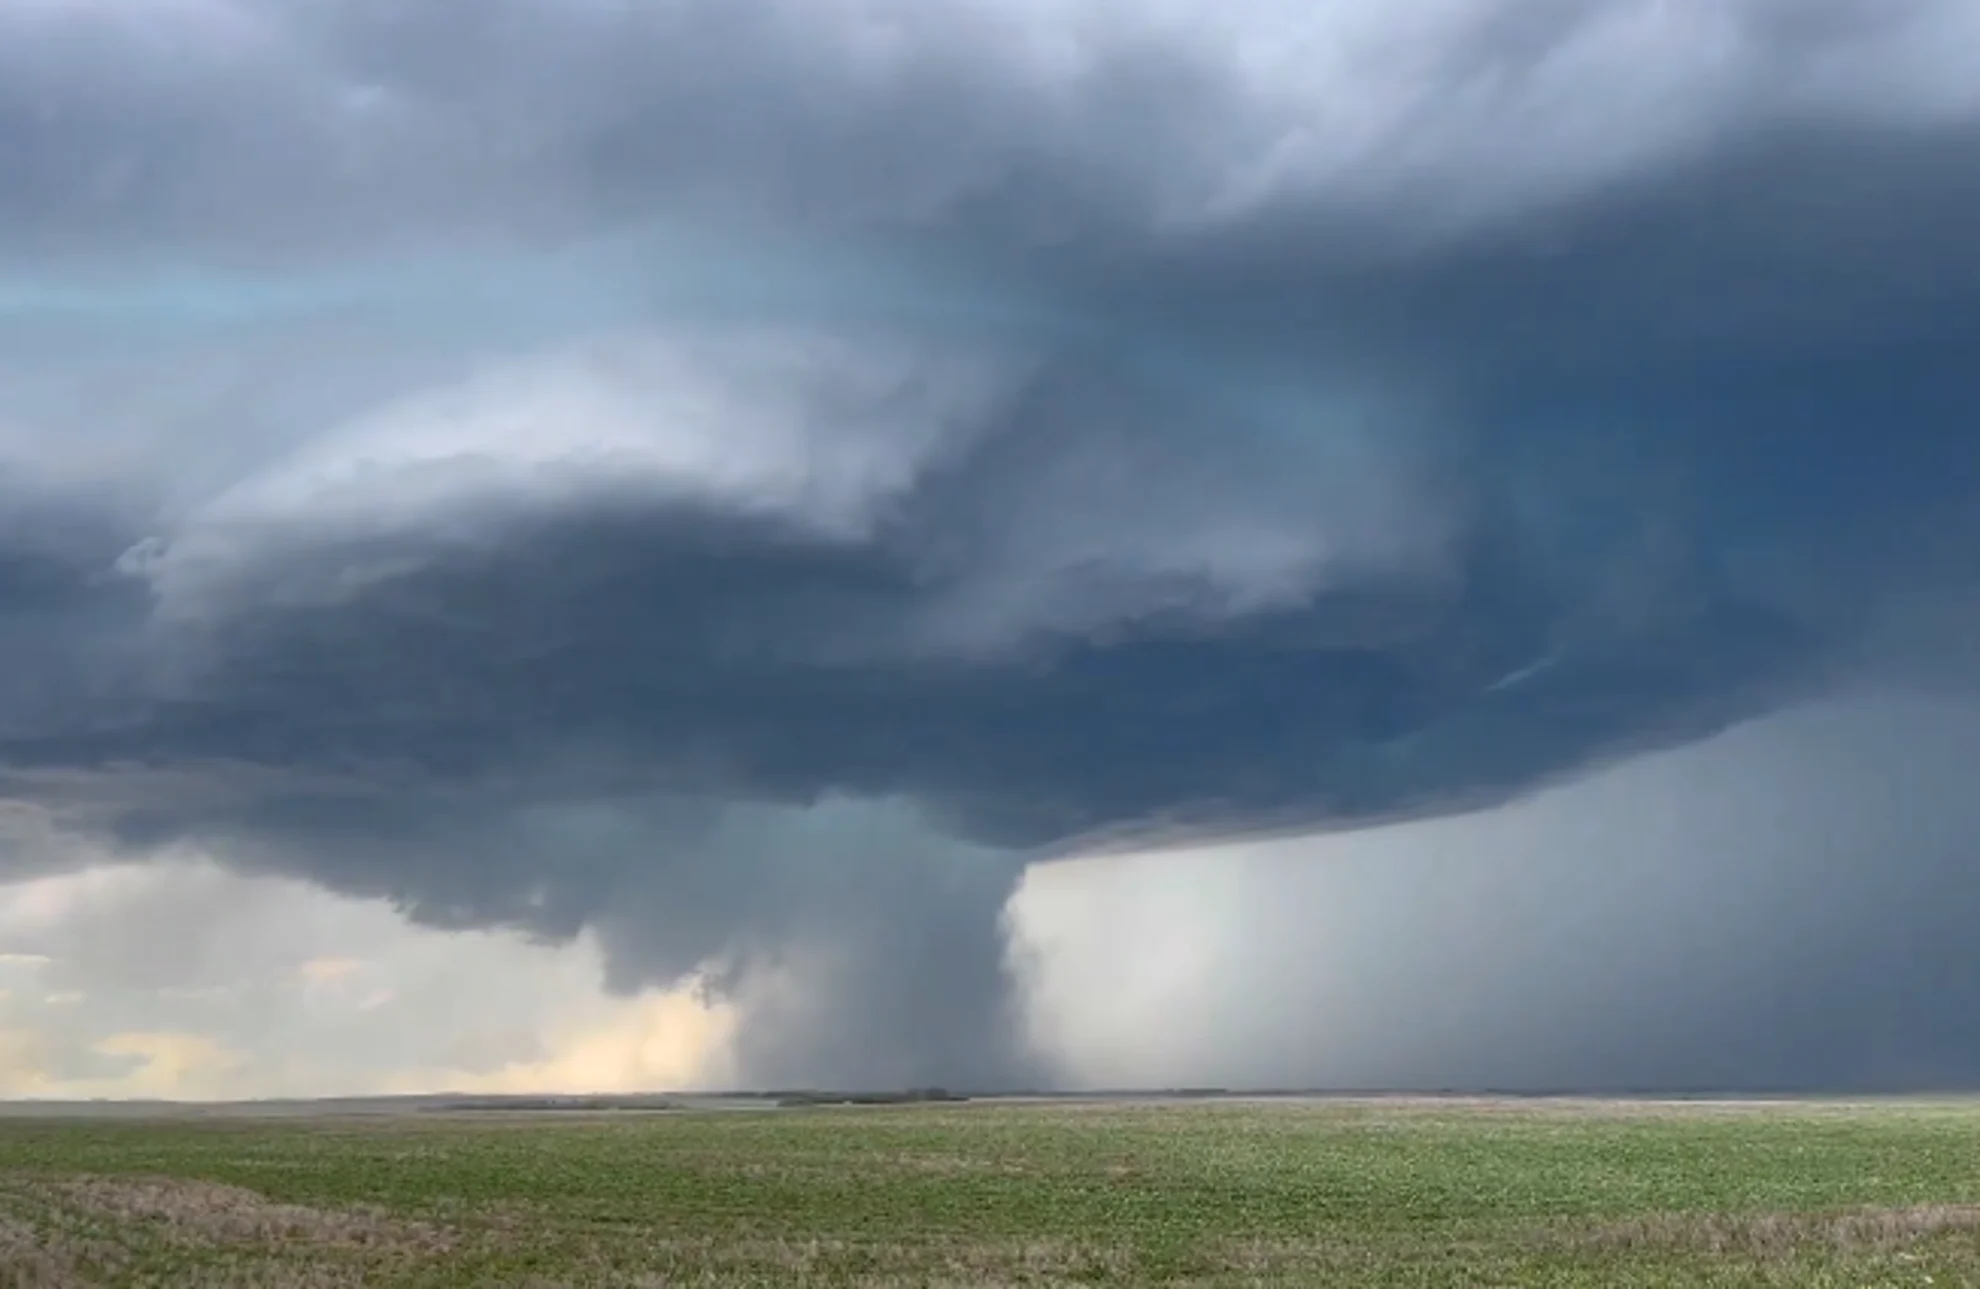 Sunday's severe outbreak prompted 6 concurrent tornado warnings in Saskatchewan